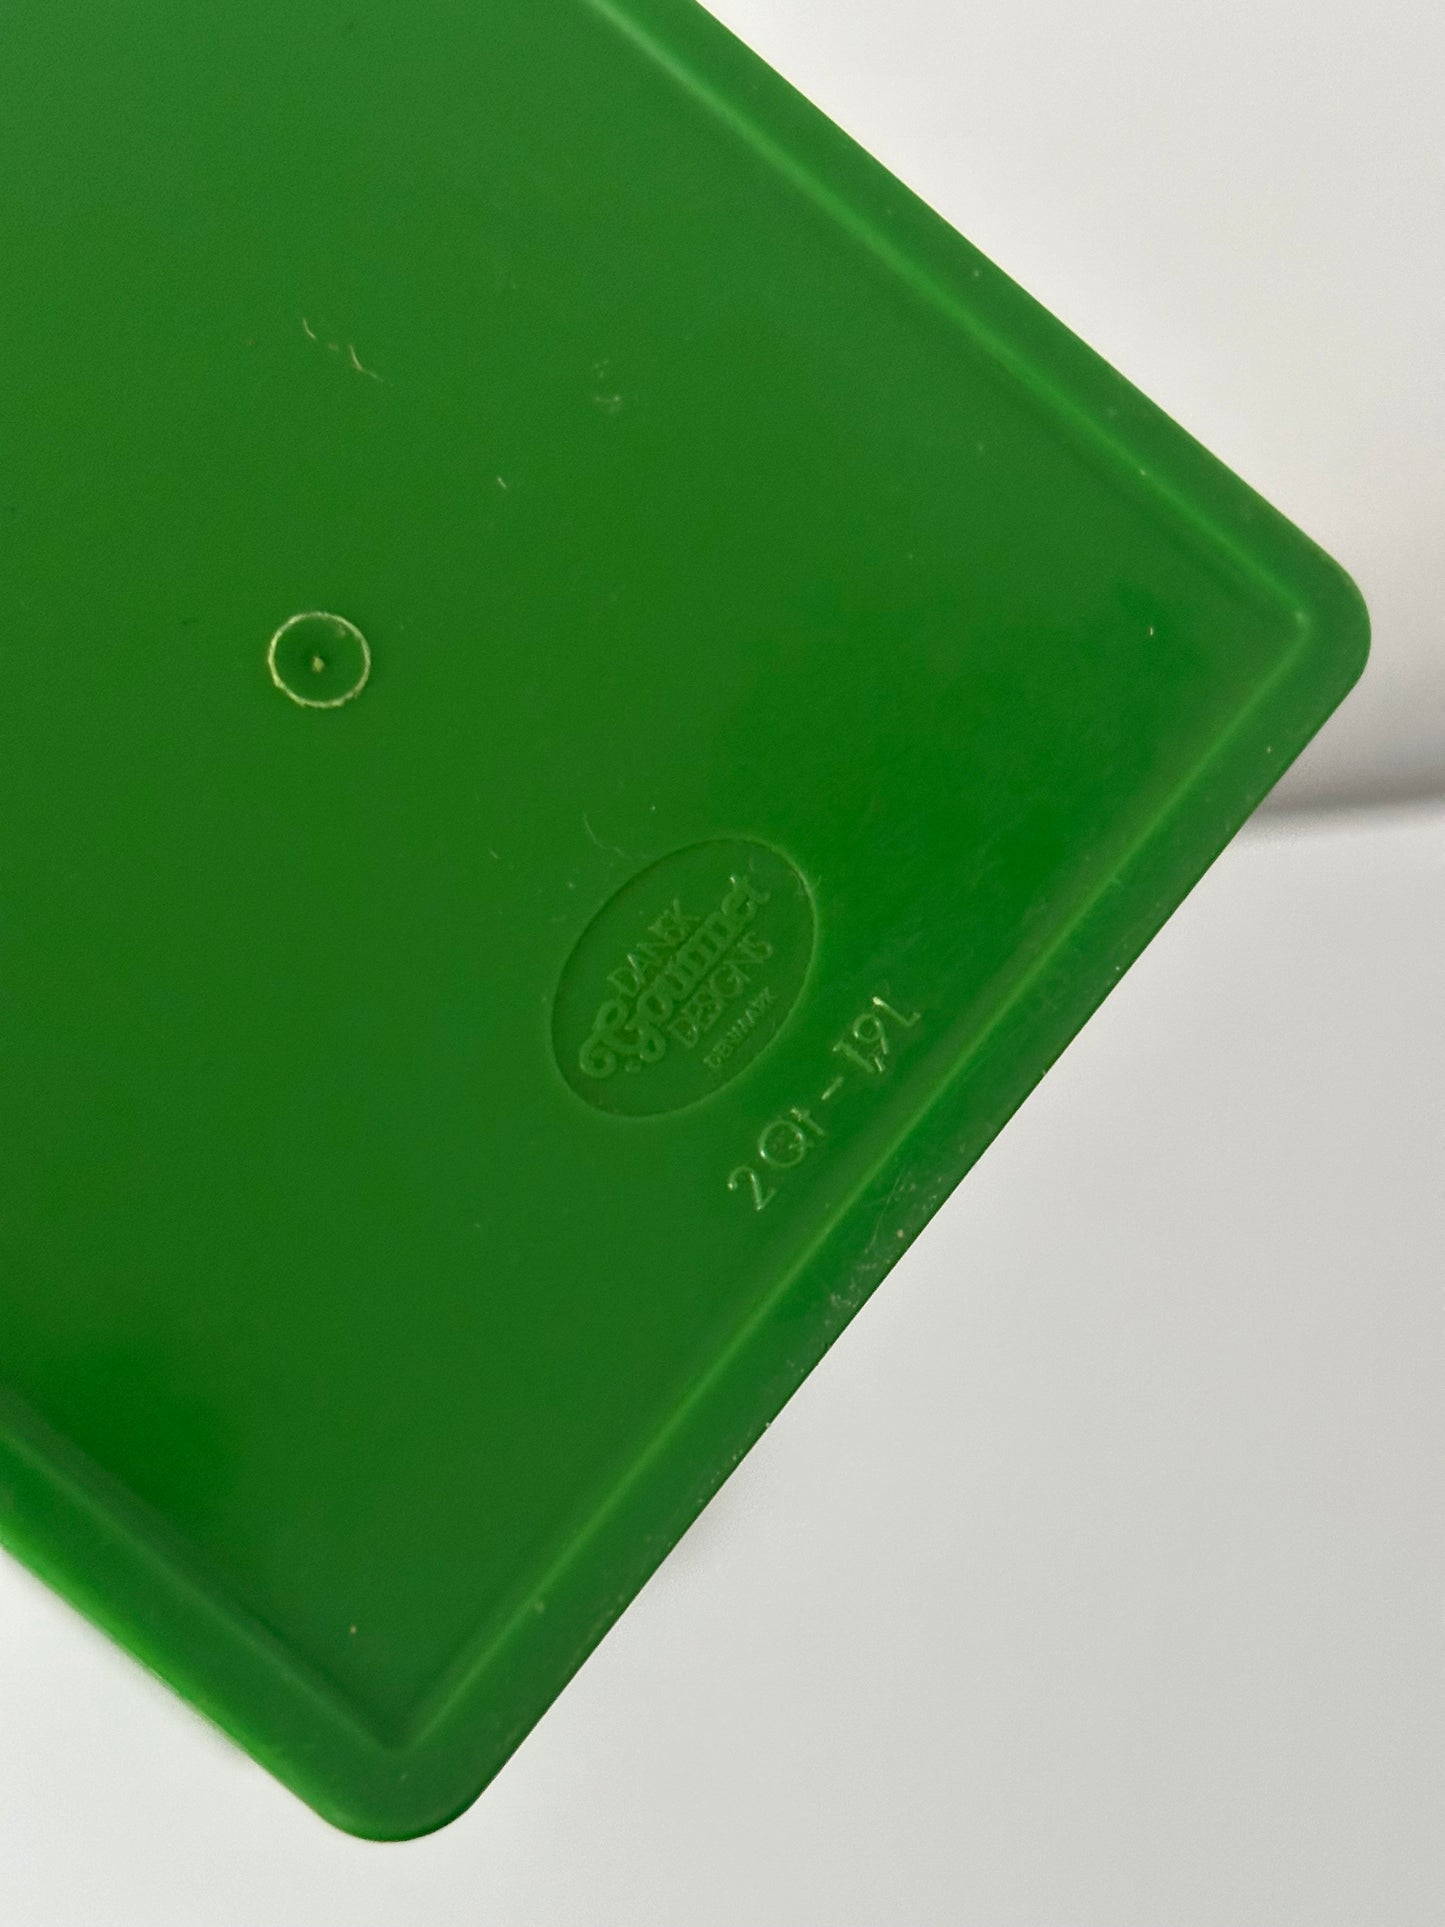 Vintage Green Plastic Canister